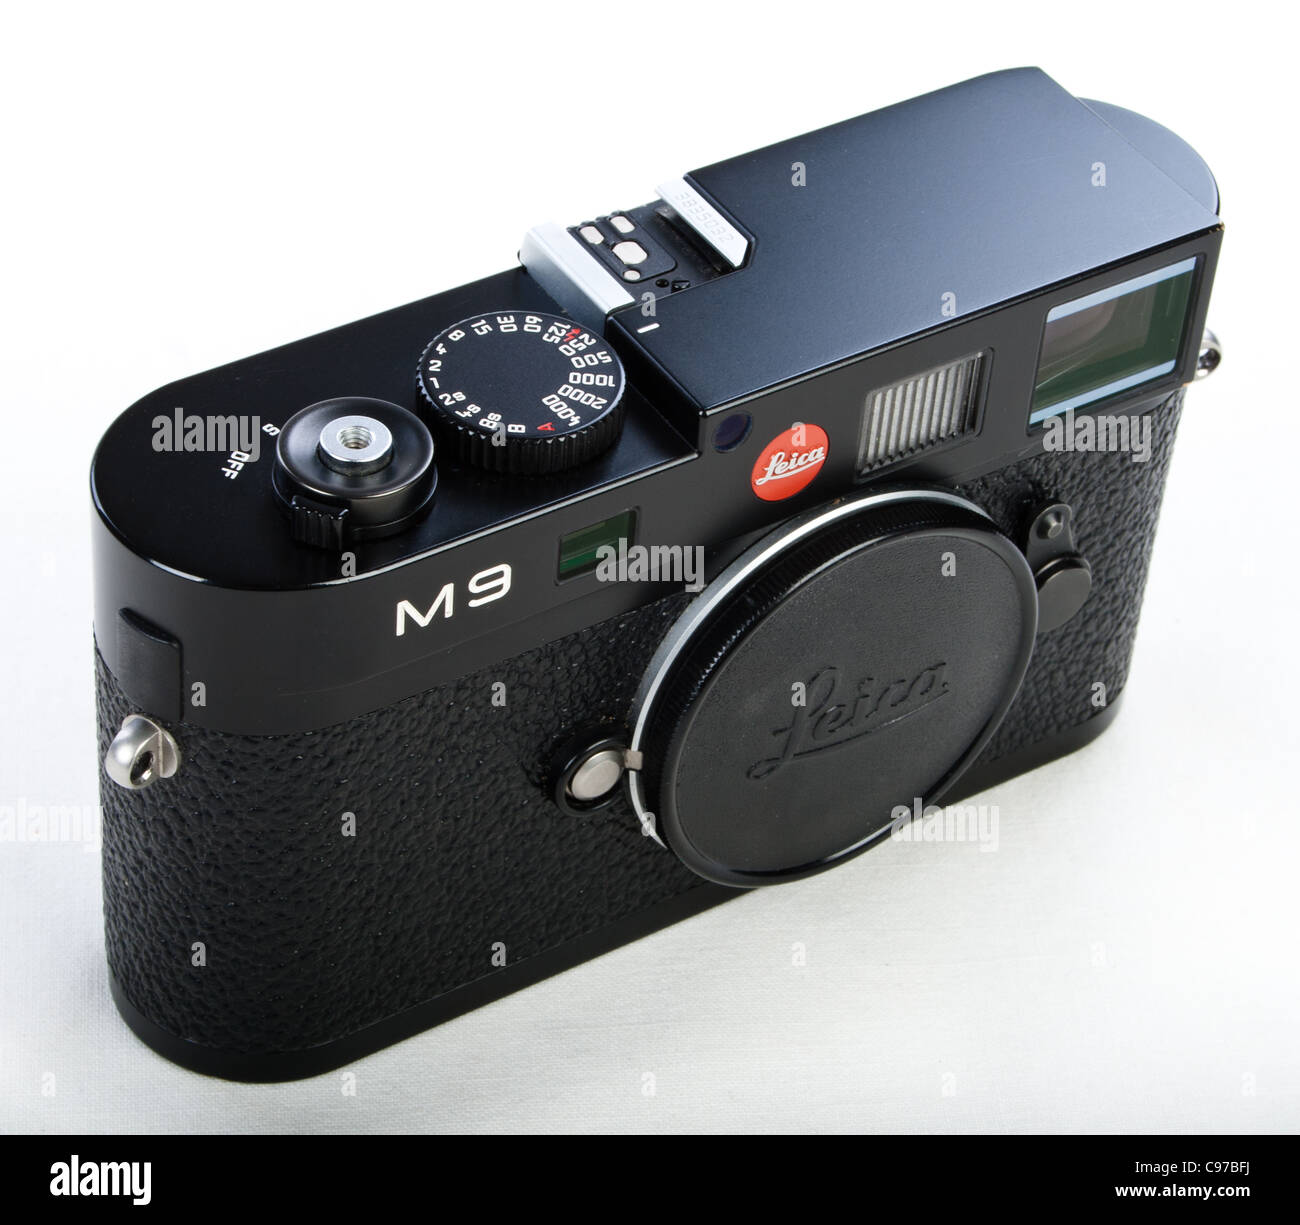 LEICA M9 Digital Rangefinder Camera Body Stock Photo